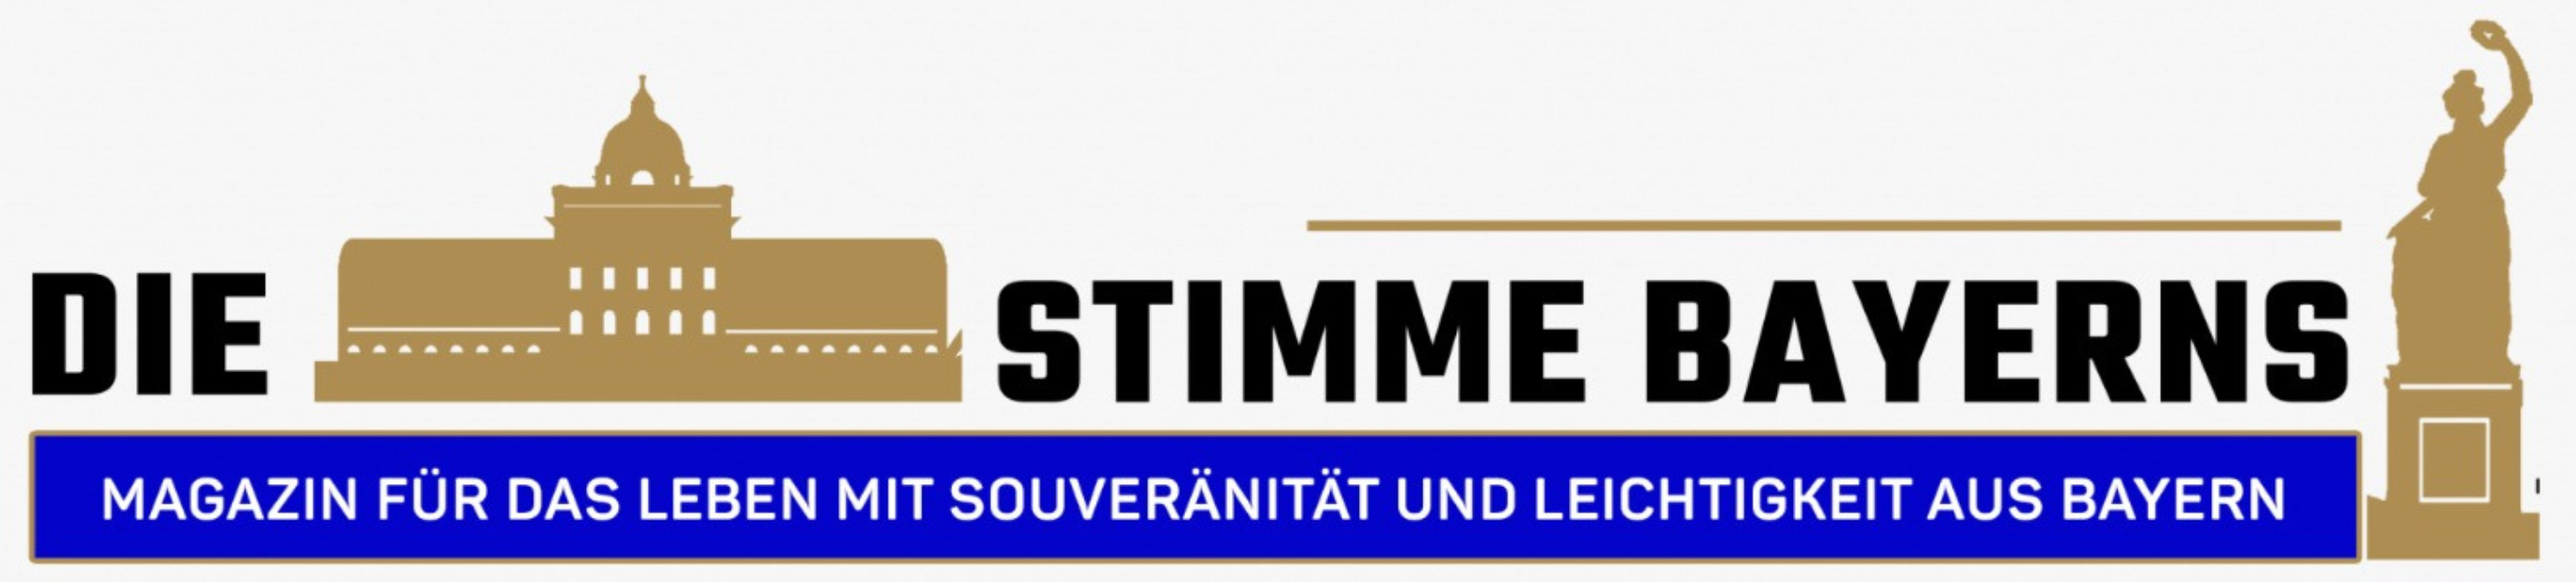 cropped-die-stimme-bayerns-logo.png